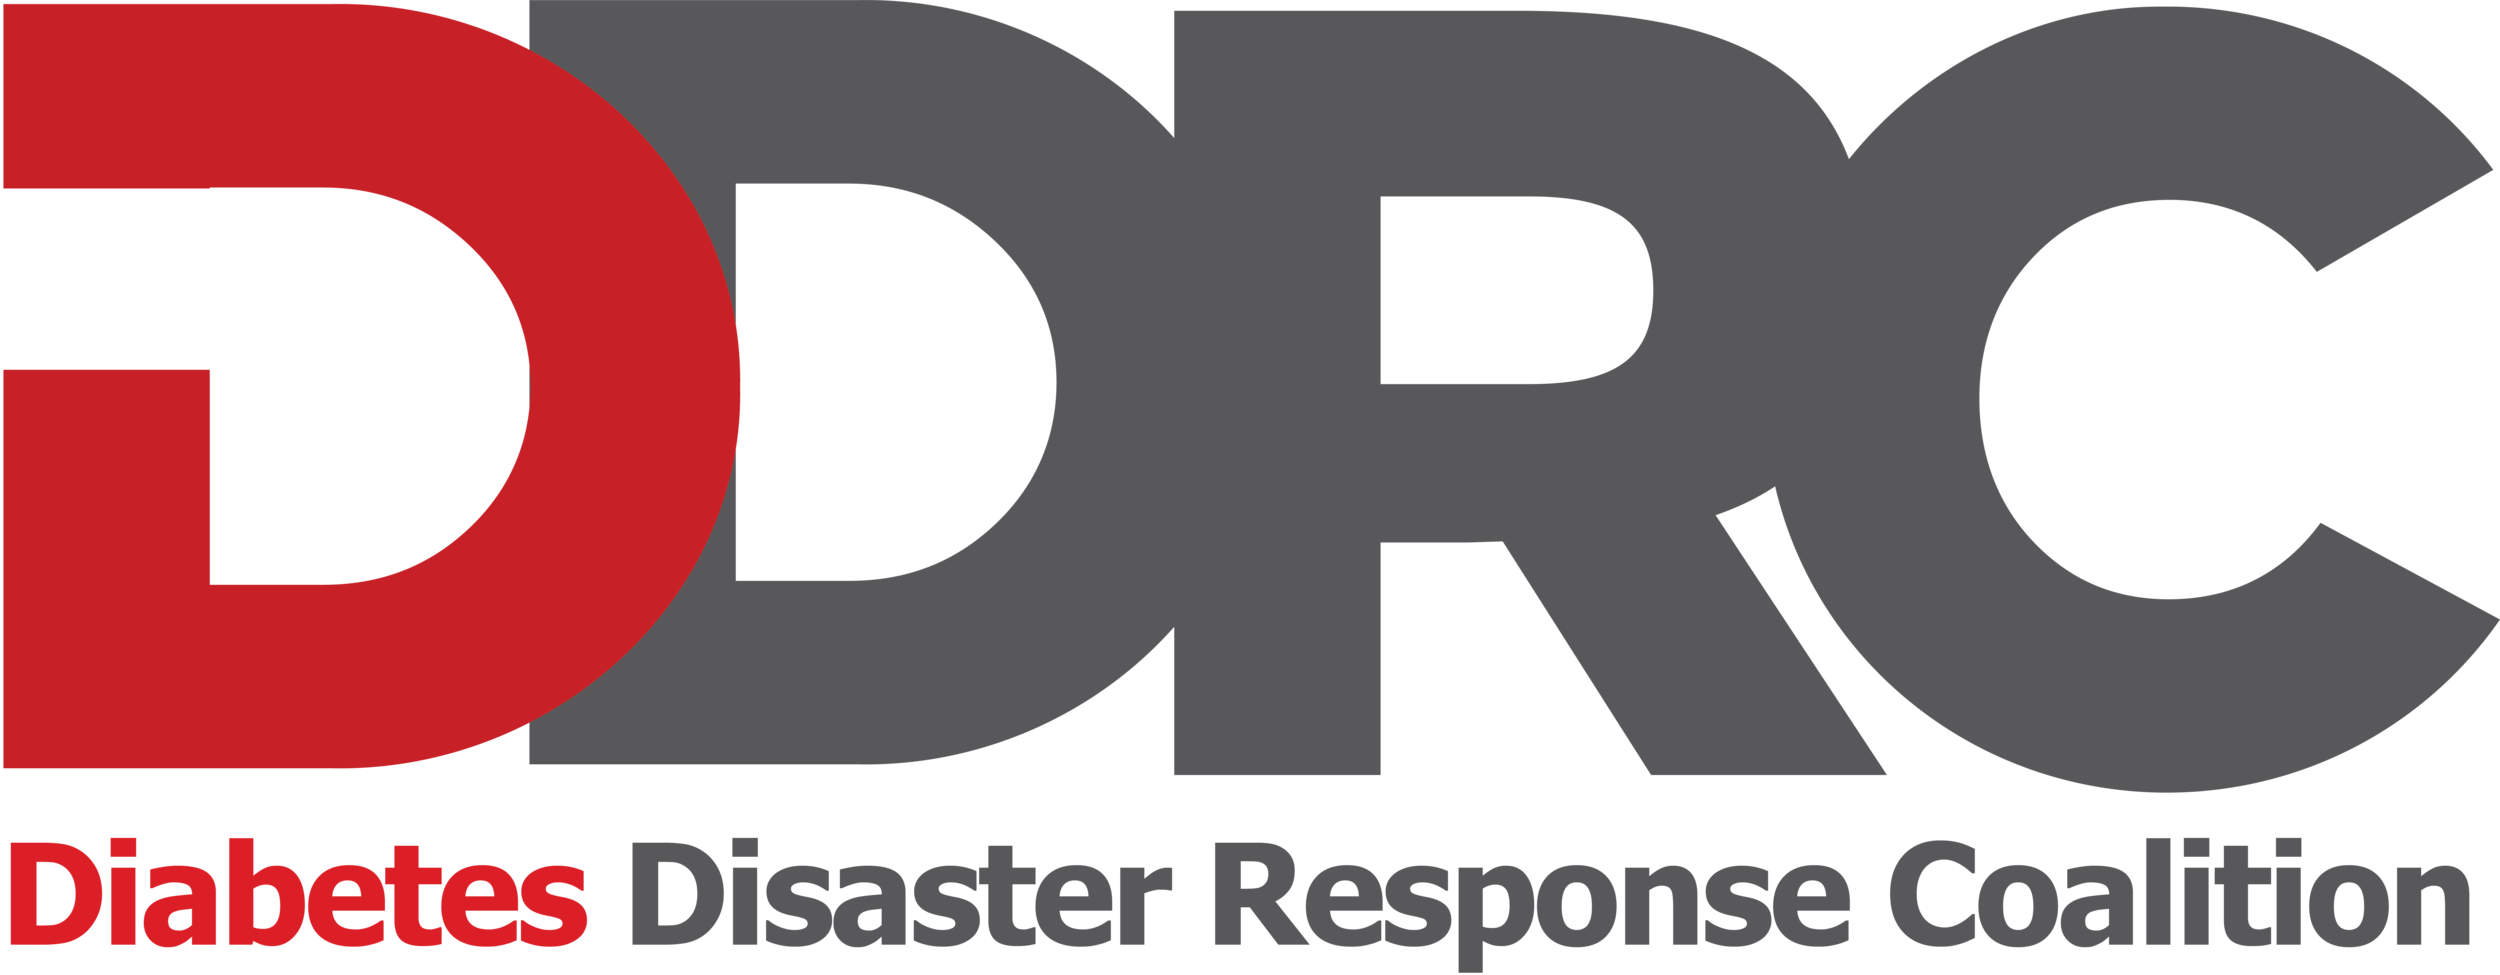 Diabetes Disaster Response Coalition